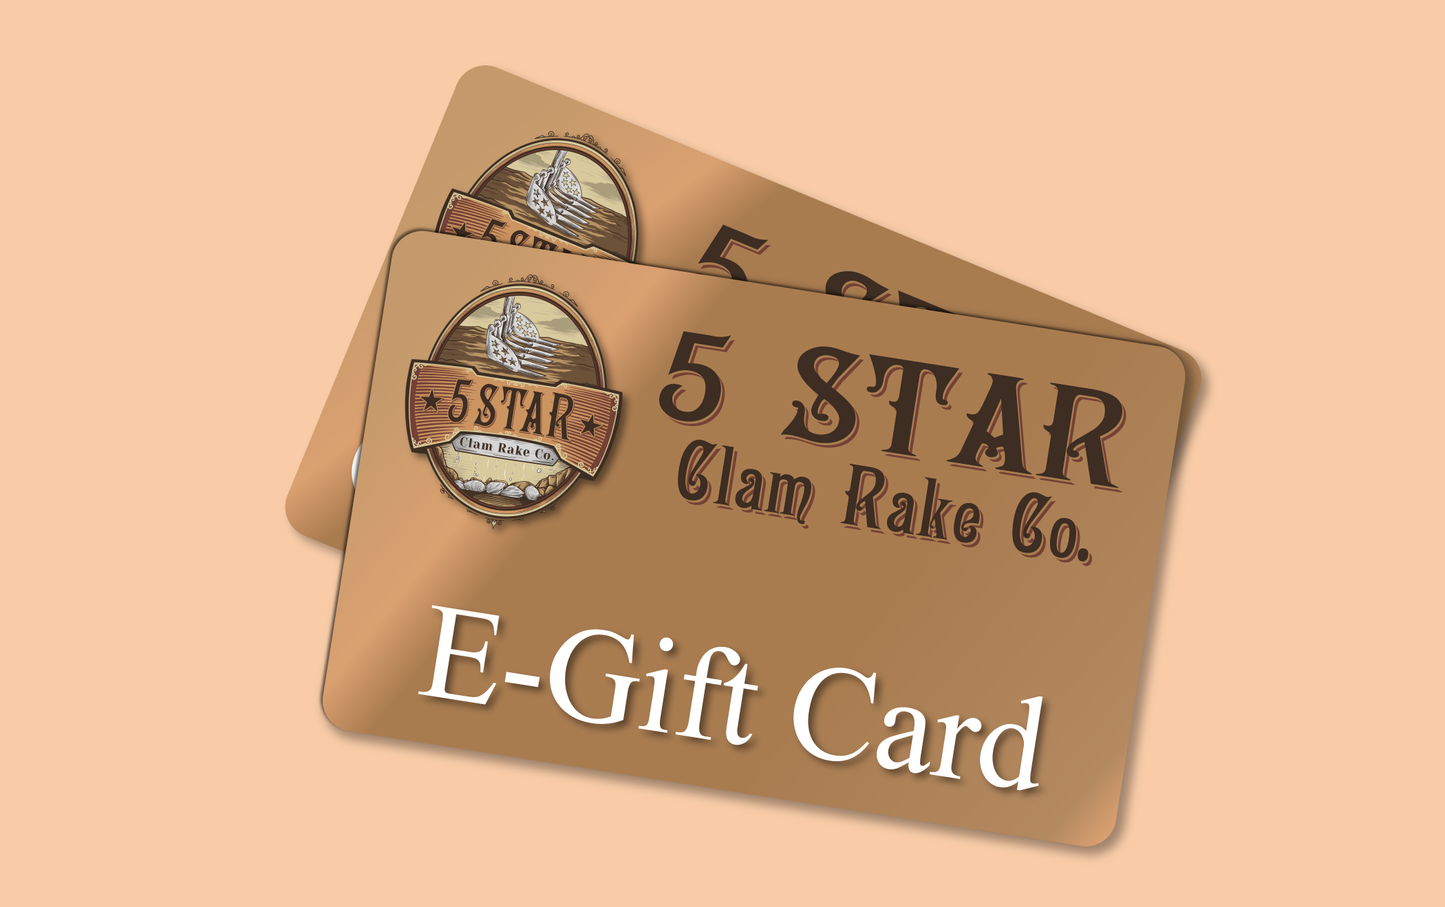 E-Gift Card - 5 Star Clam Rake Co.